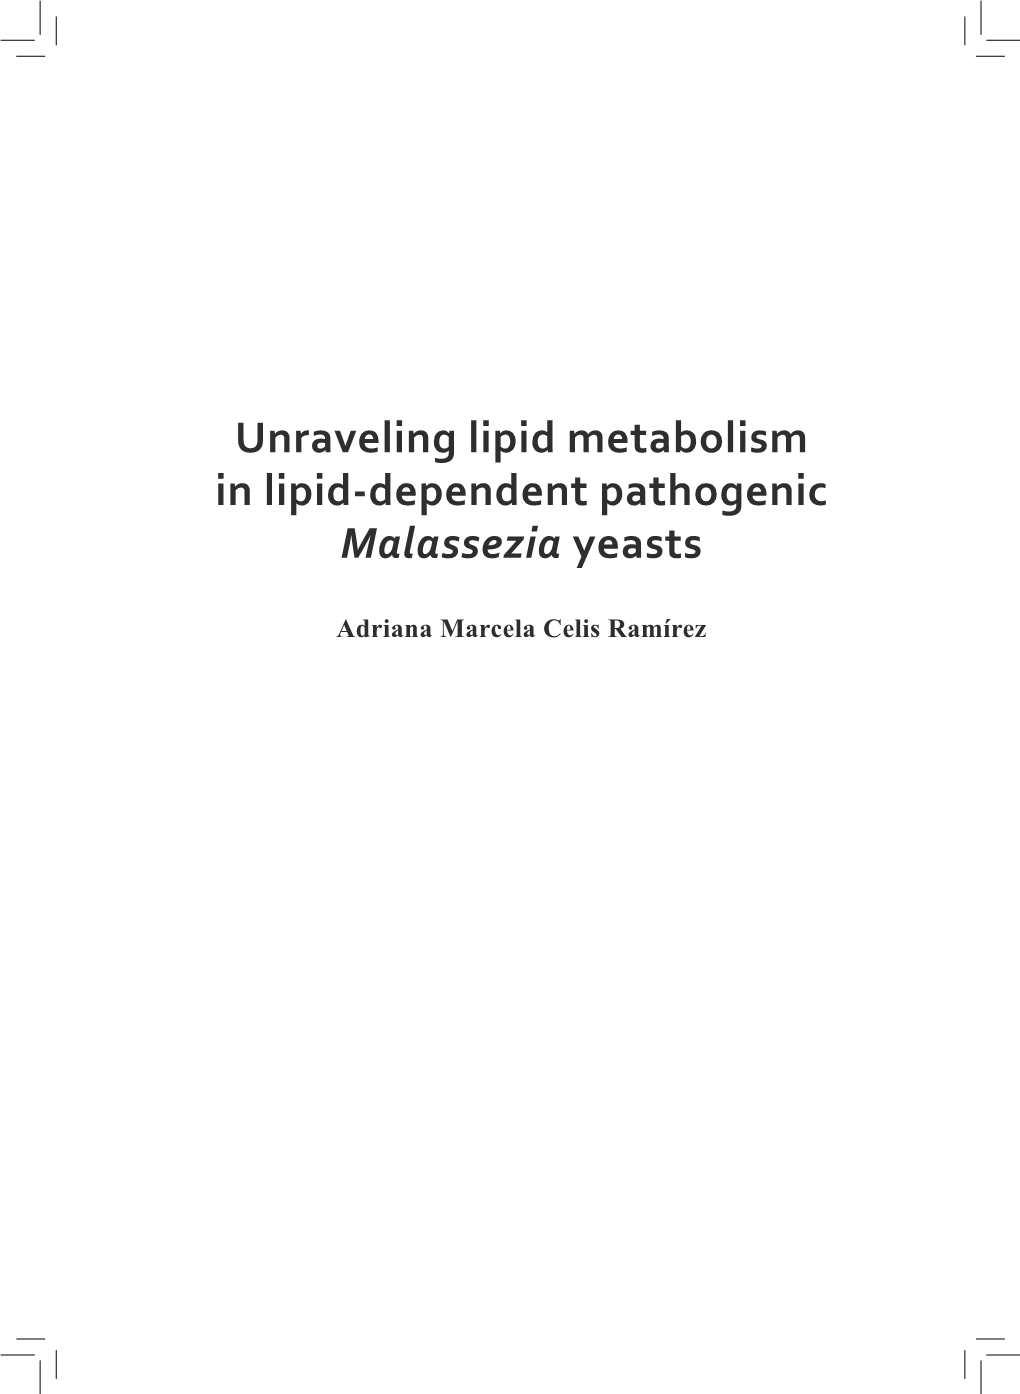 Unraveling Lipid Metabolism in Lipid-Dependent Pathogenic Malassezia Yeasts